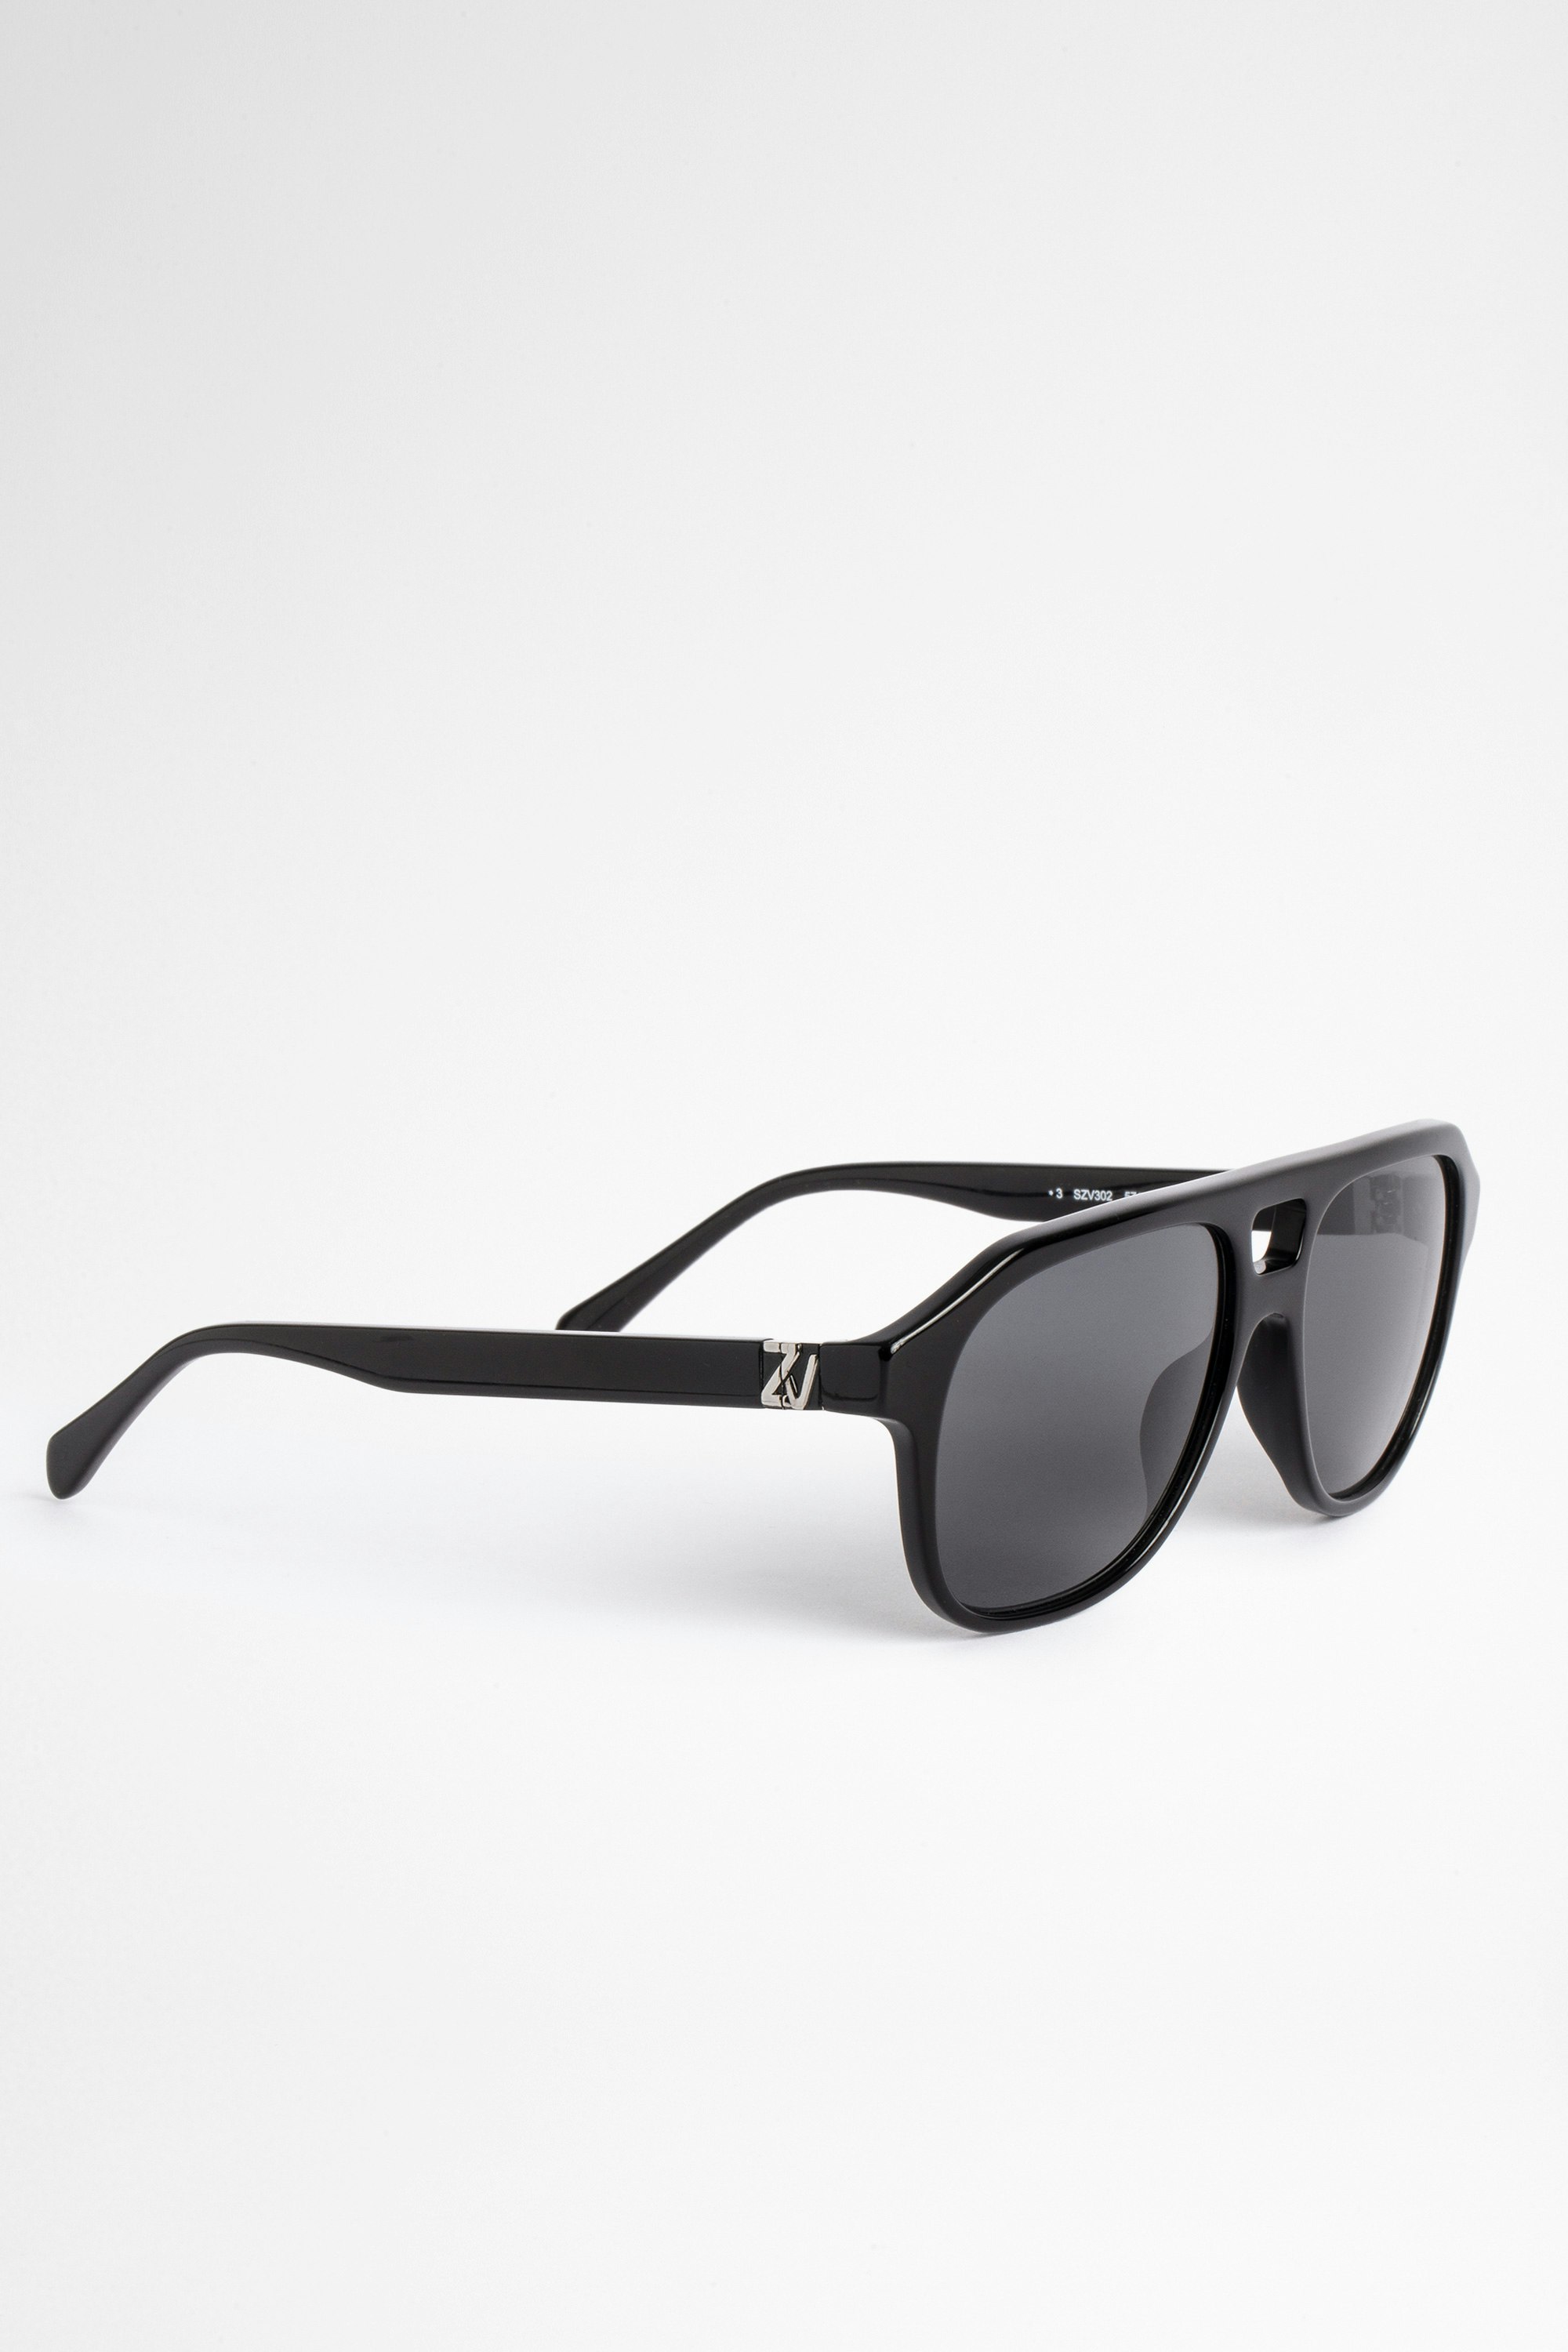 Sunglasses Shiny Zadig&Volatire unisex acetate sunglasses, black color.